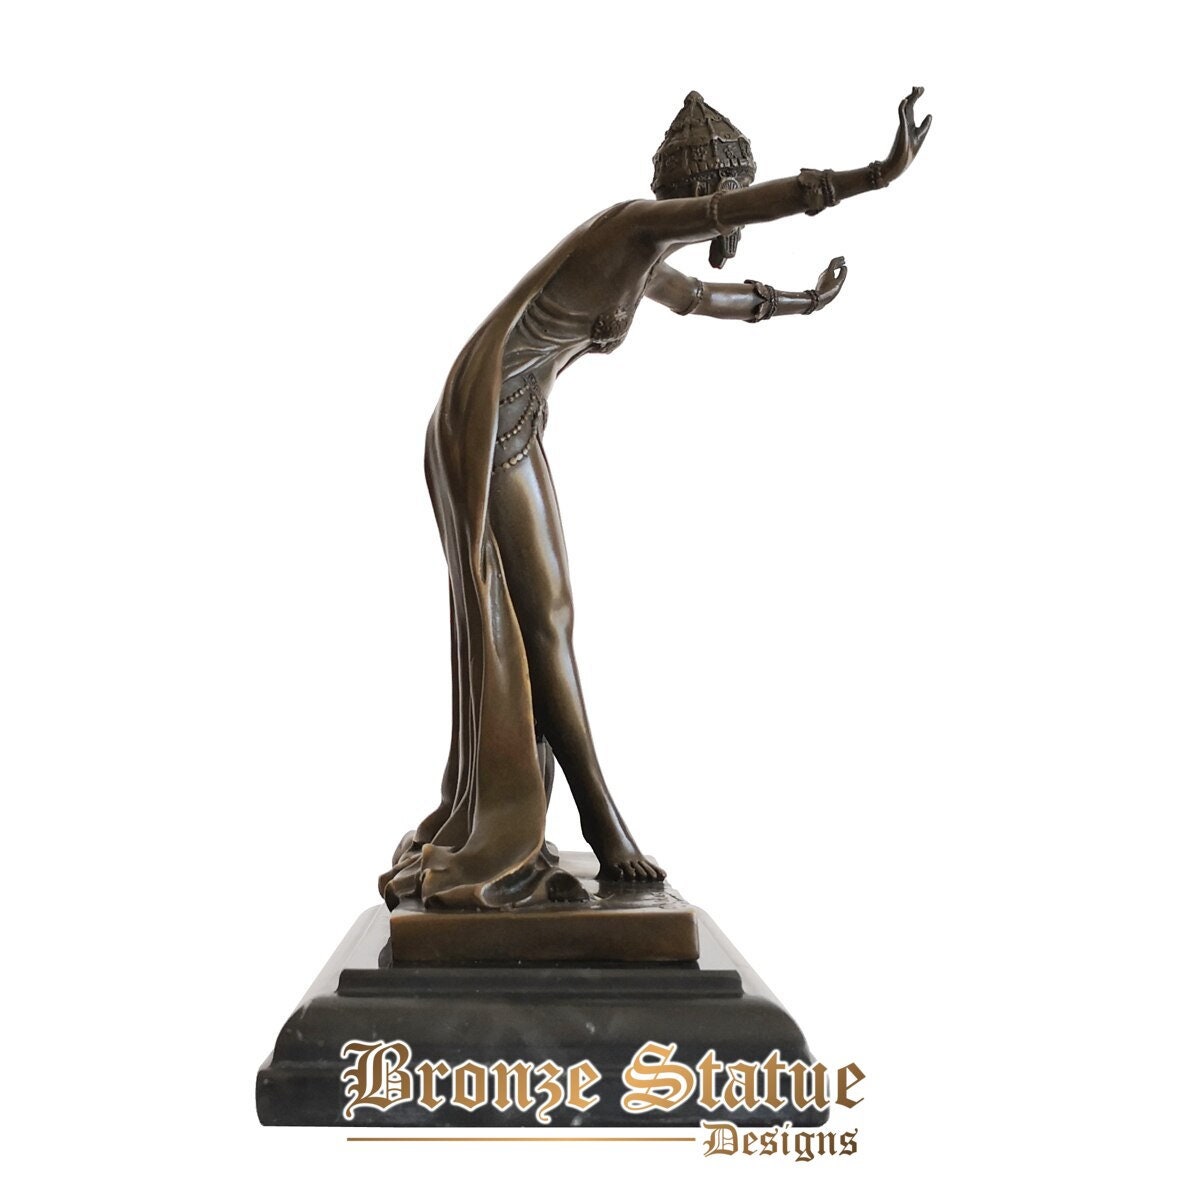 Bronze assyria dance statue sculpture antique classical asian woman art collectible figurine home office decor